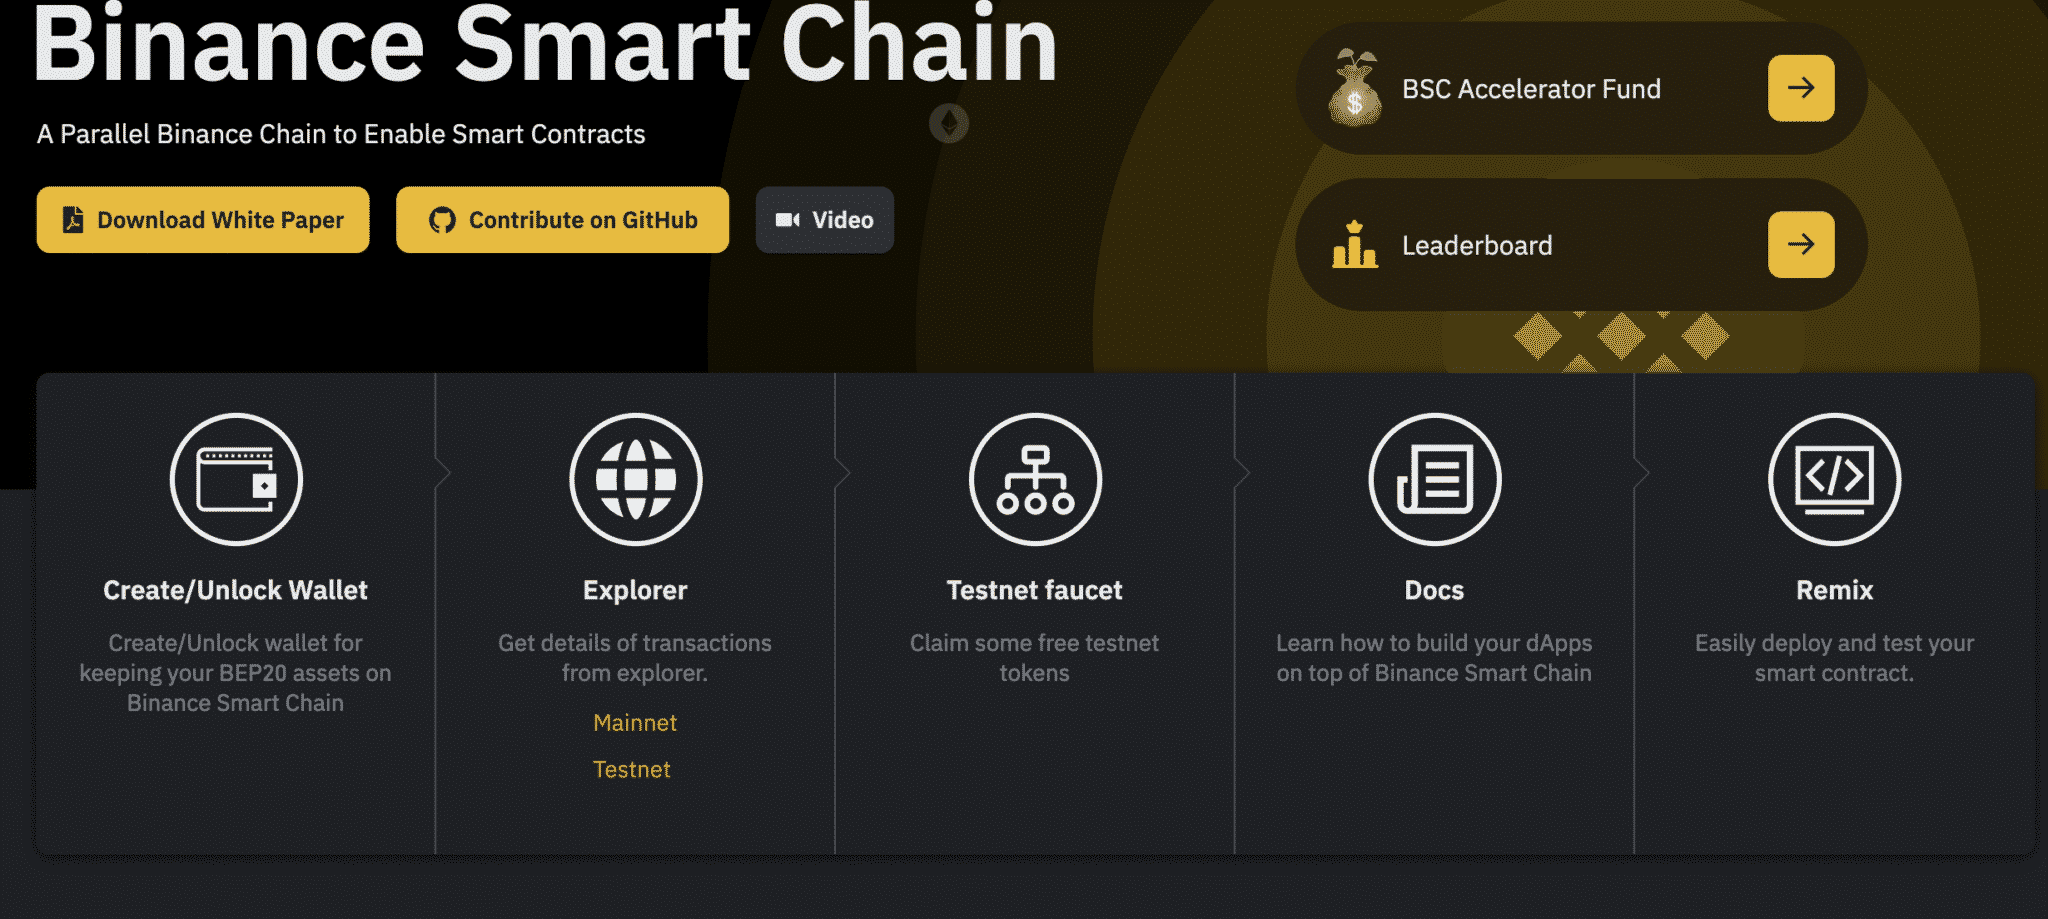 BNB Chain Explorer | Blockchain Explorer | OKLink